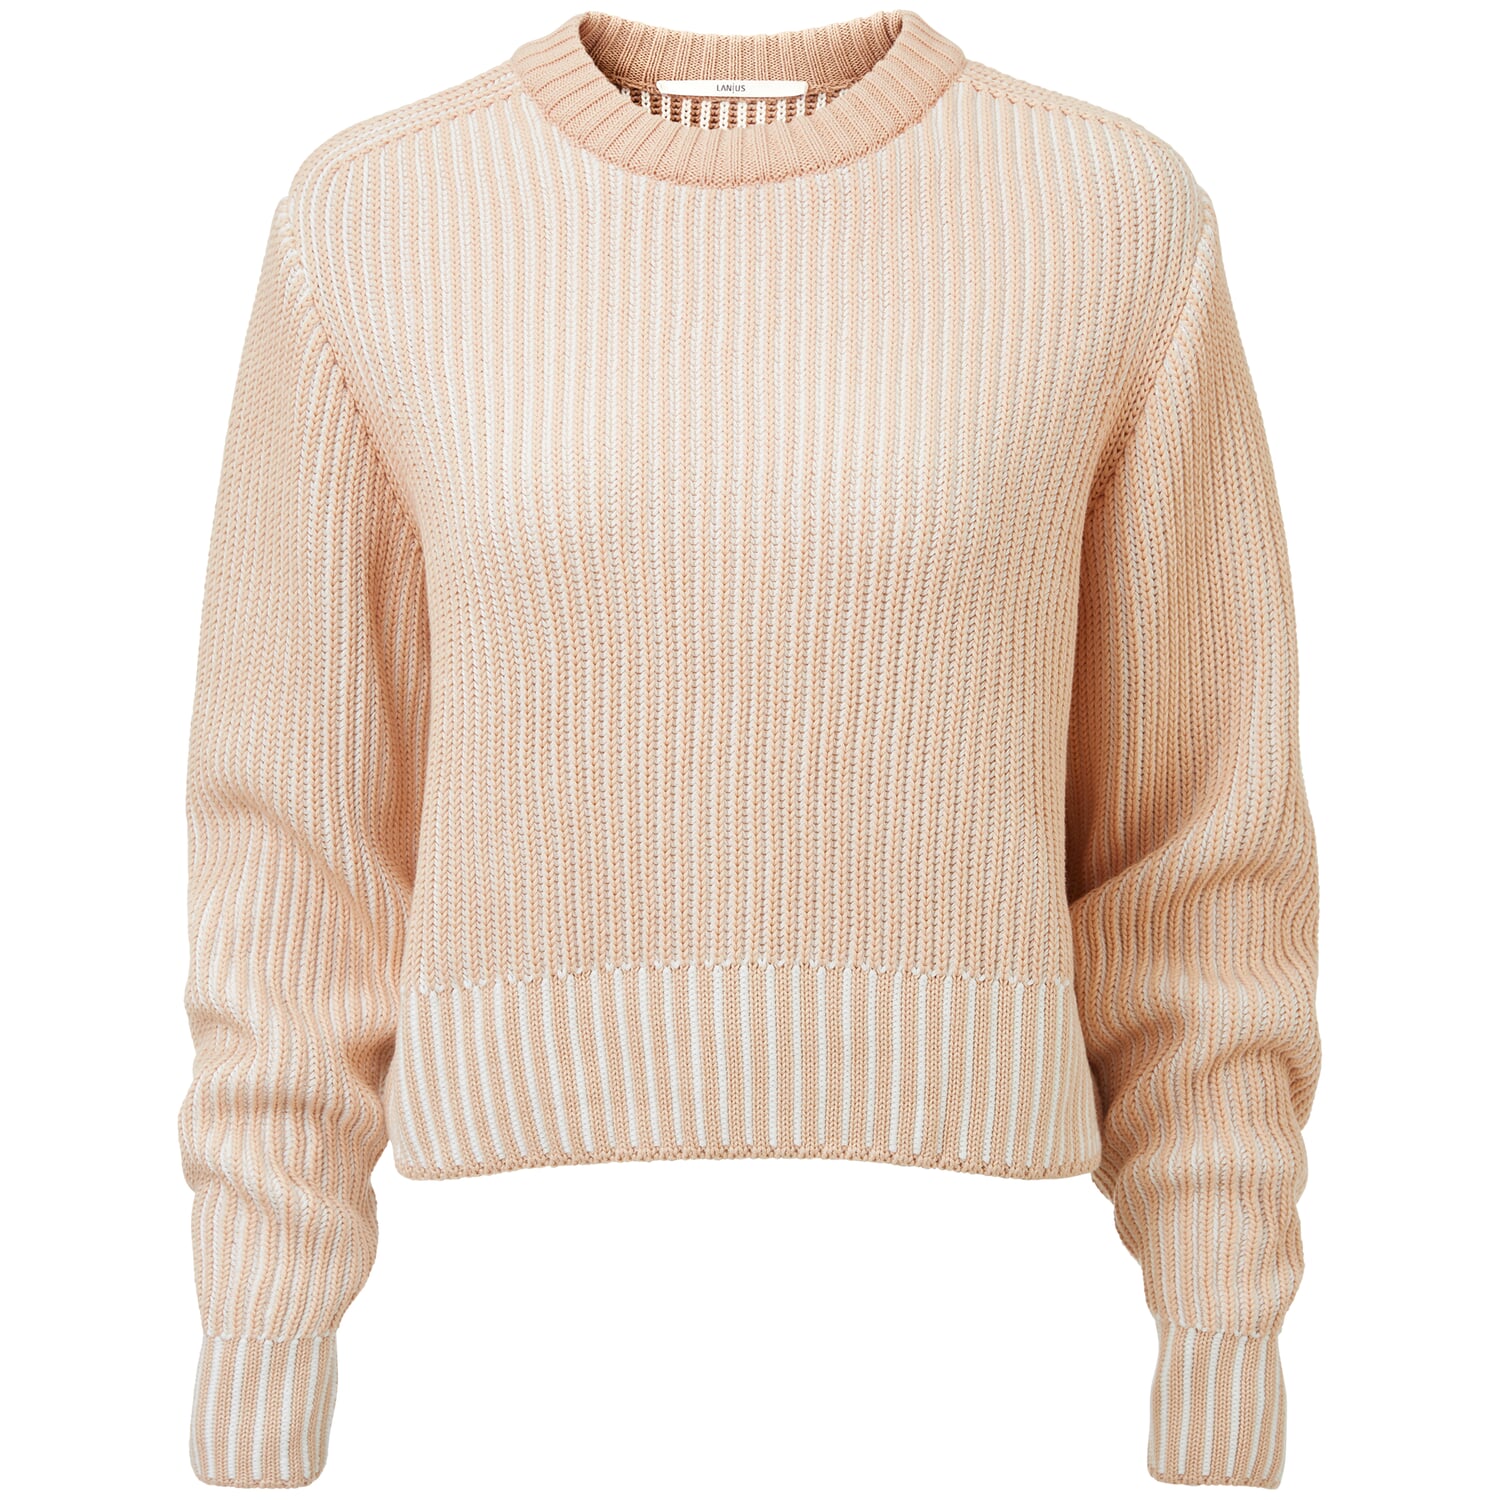 https://assets.manufactum.de/p/209/209351/209351_01.jpg/ladies-coarse-knit-sweater.jpg?profile=pdsmain_1500